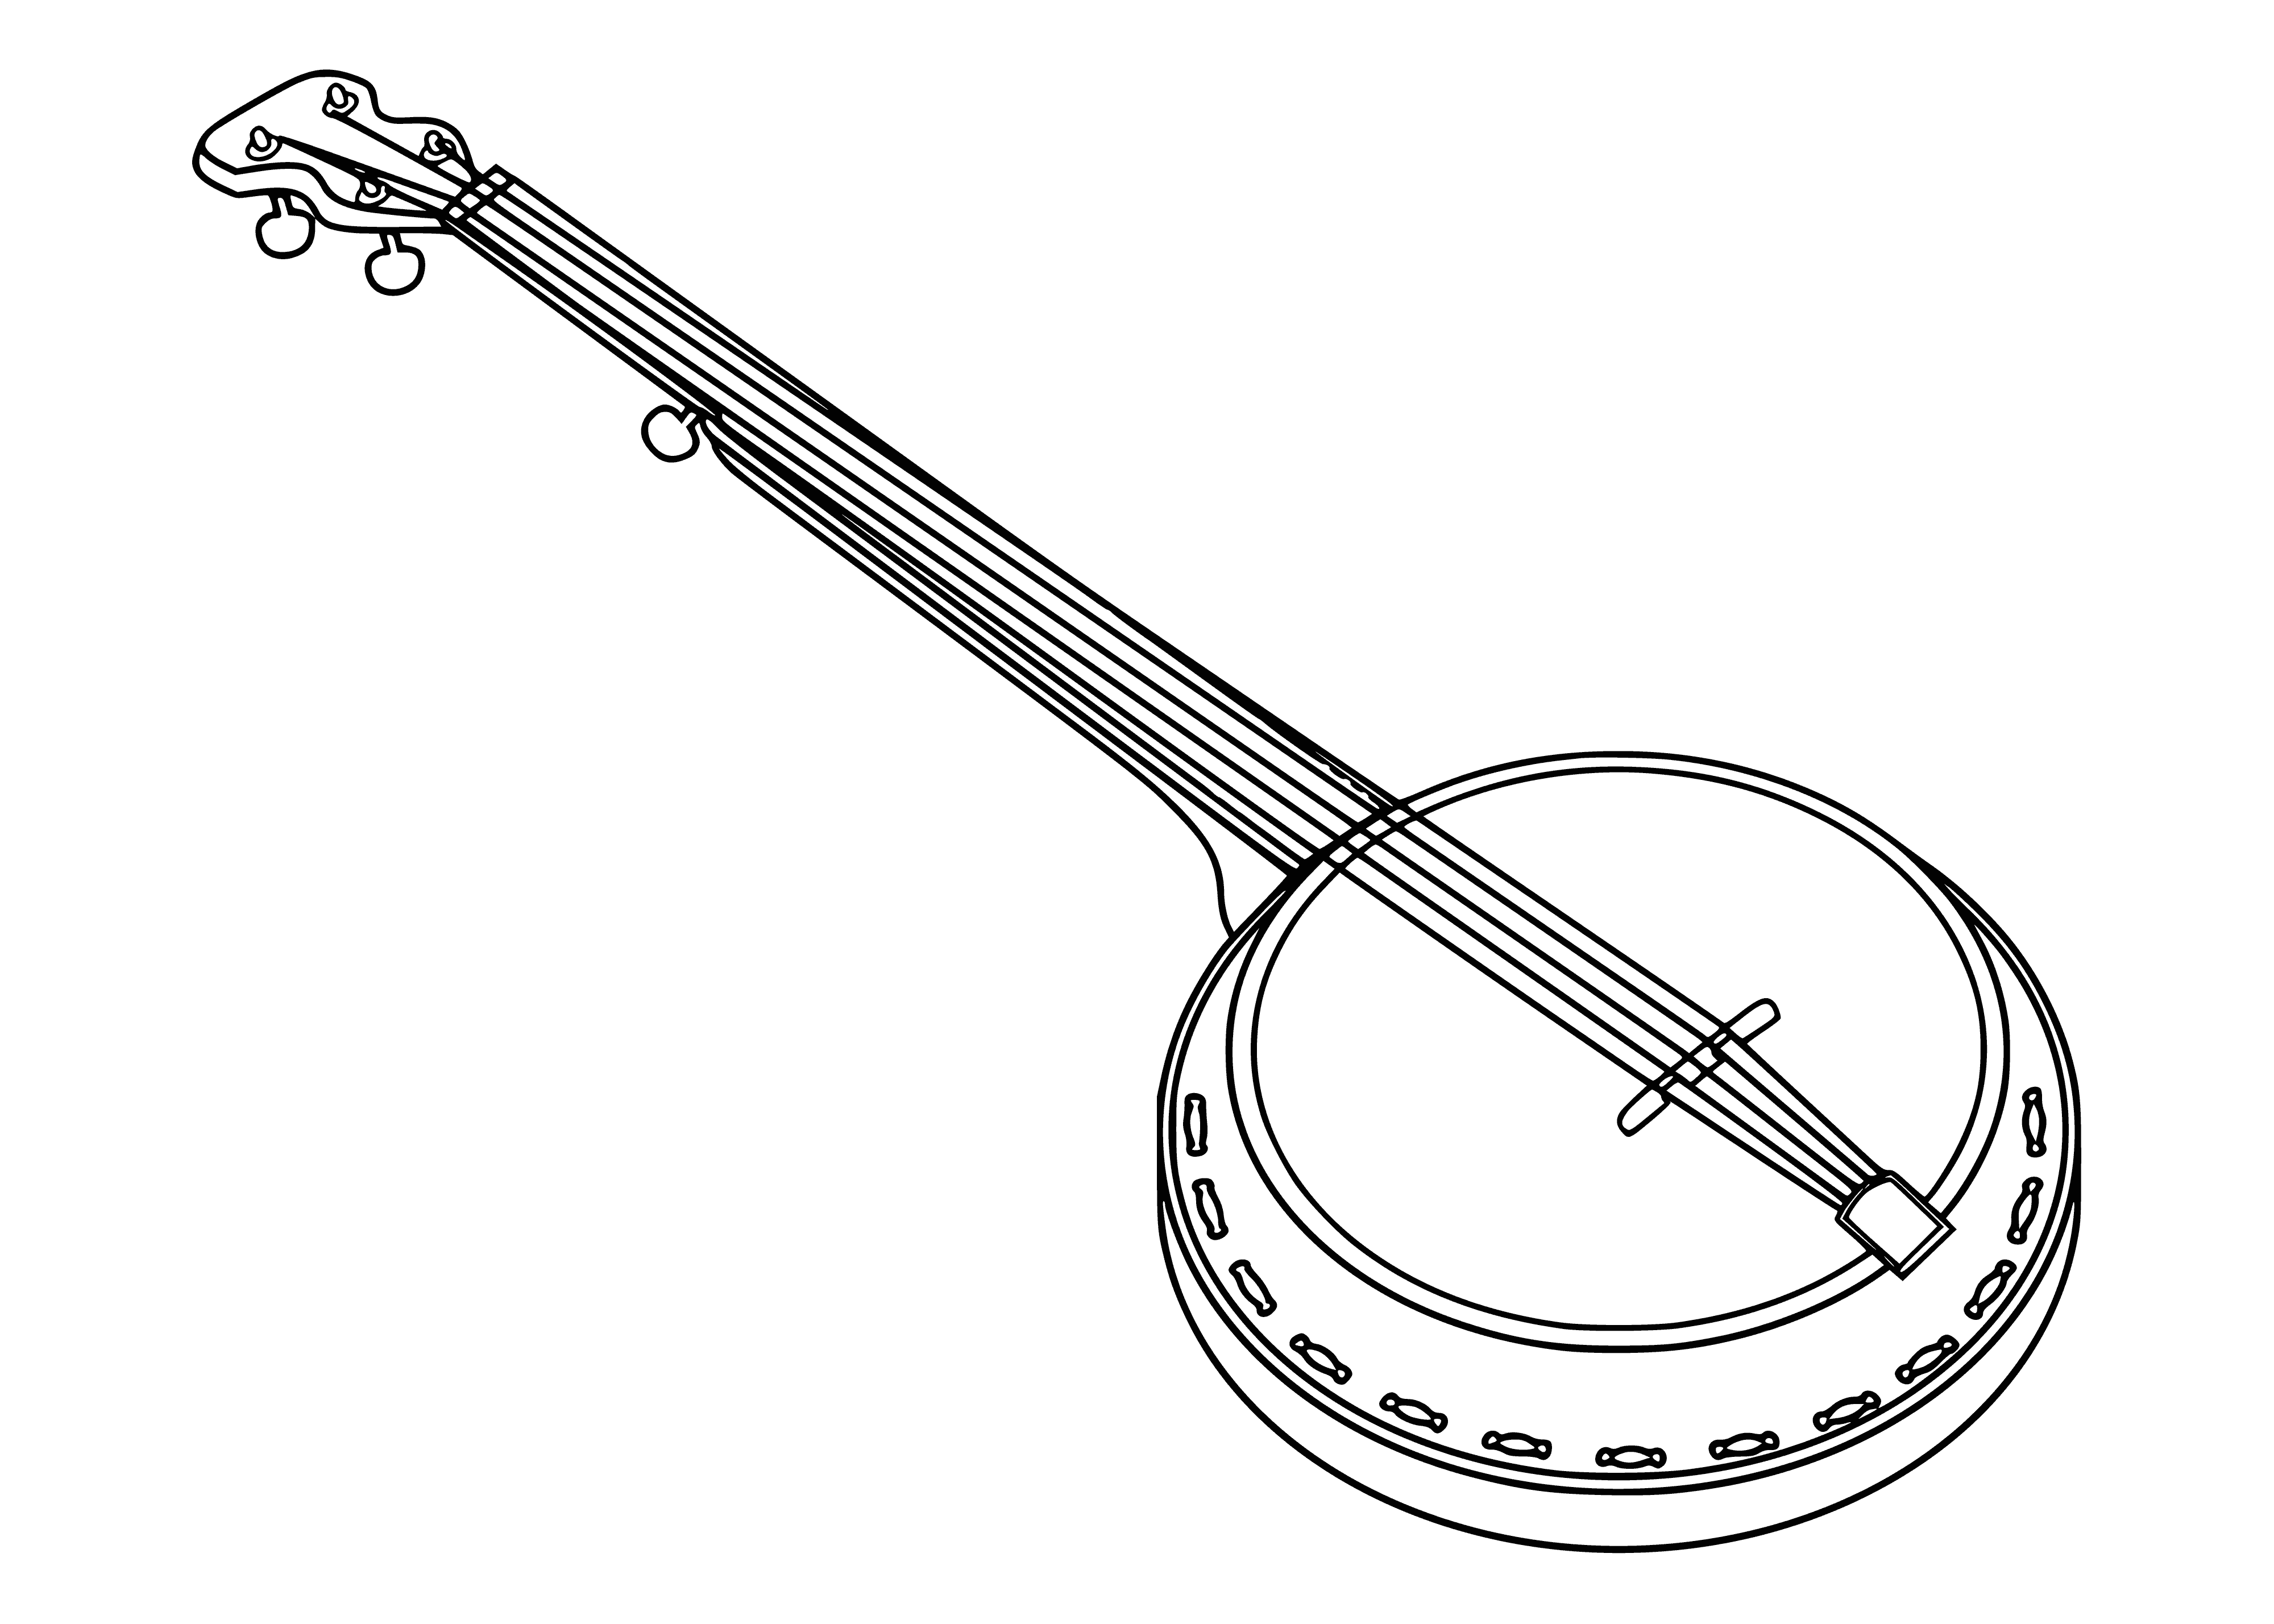 Banjo coloring page